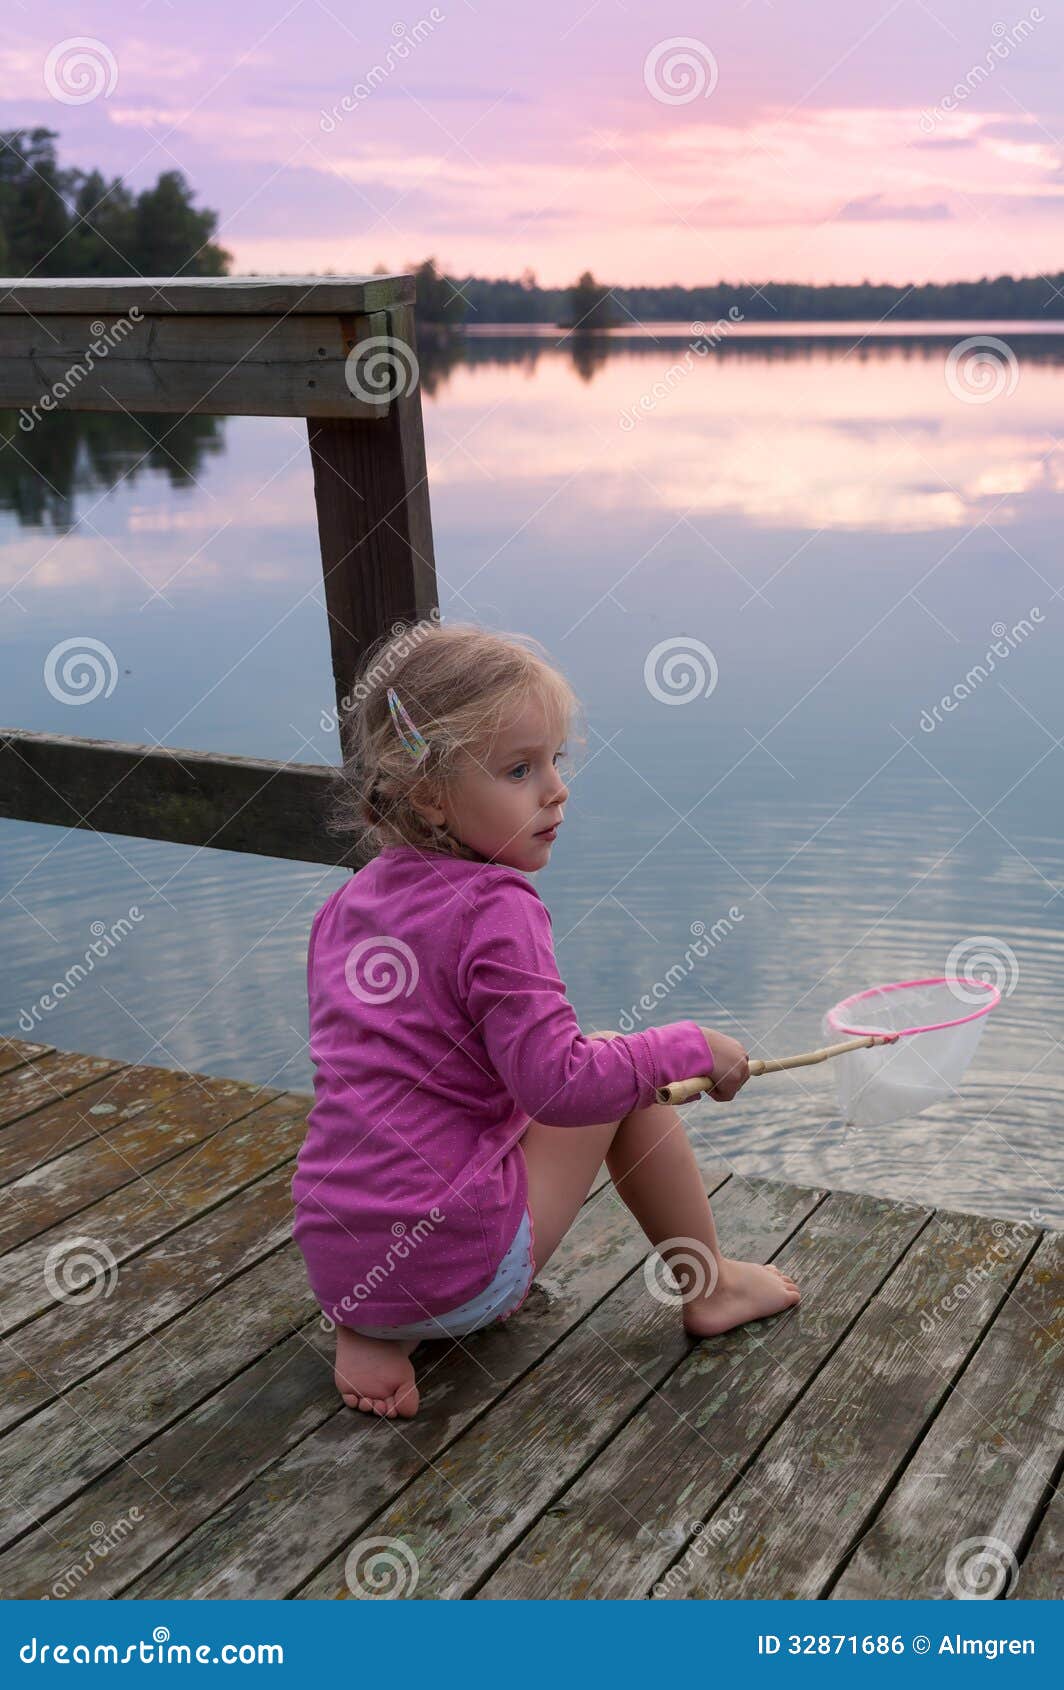 https://thumbs.dreamstime.com/z/cute-little-girl-fishing-knees-wooden-planks-pier-landing-net-light-scandinavian-summer-32871686.jpg